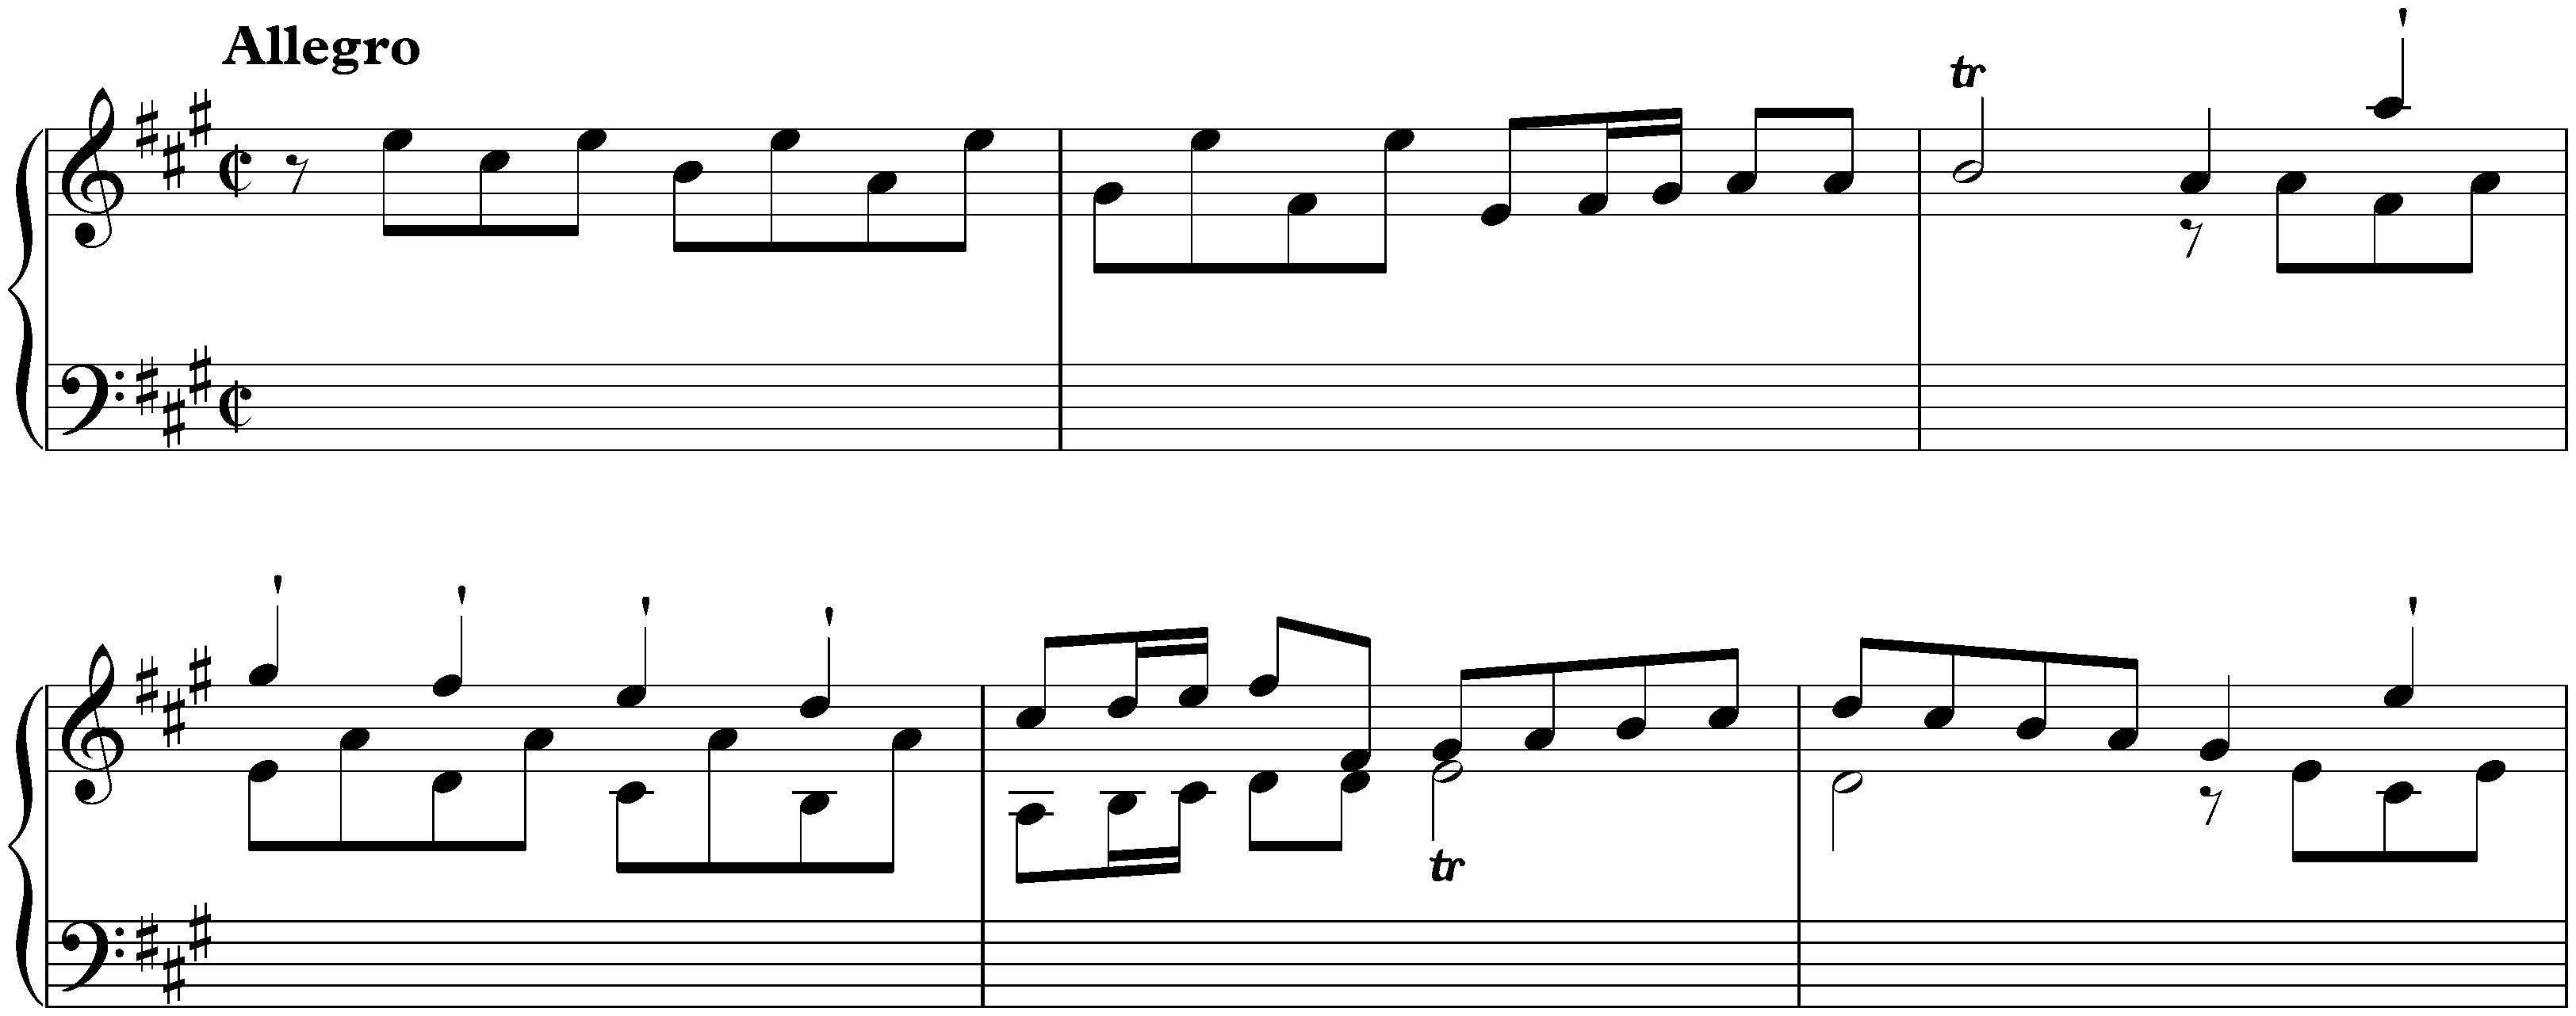 Sonatas found in London; 1. A major, 1. Allegro